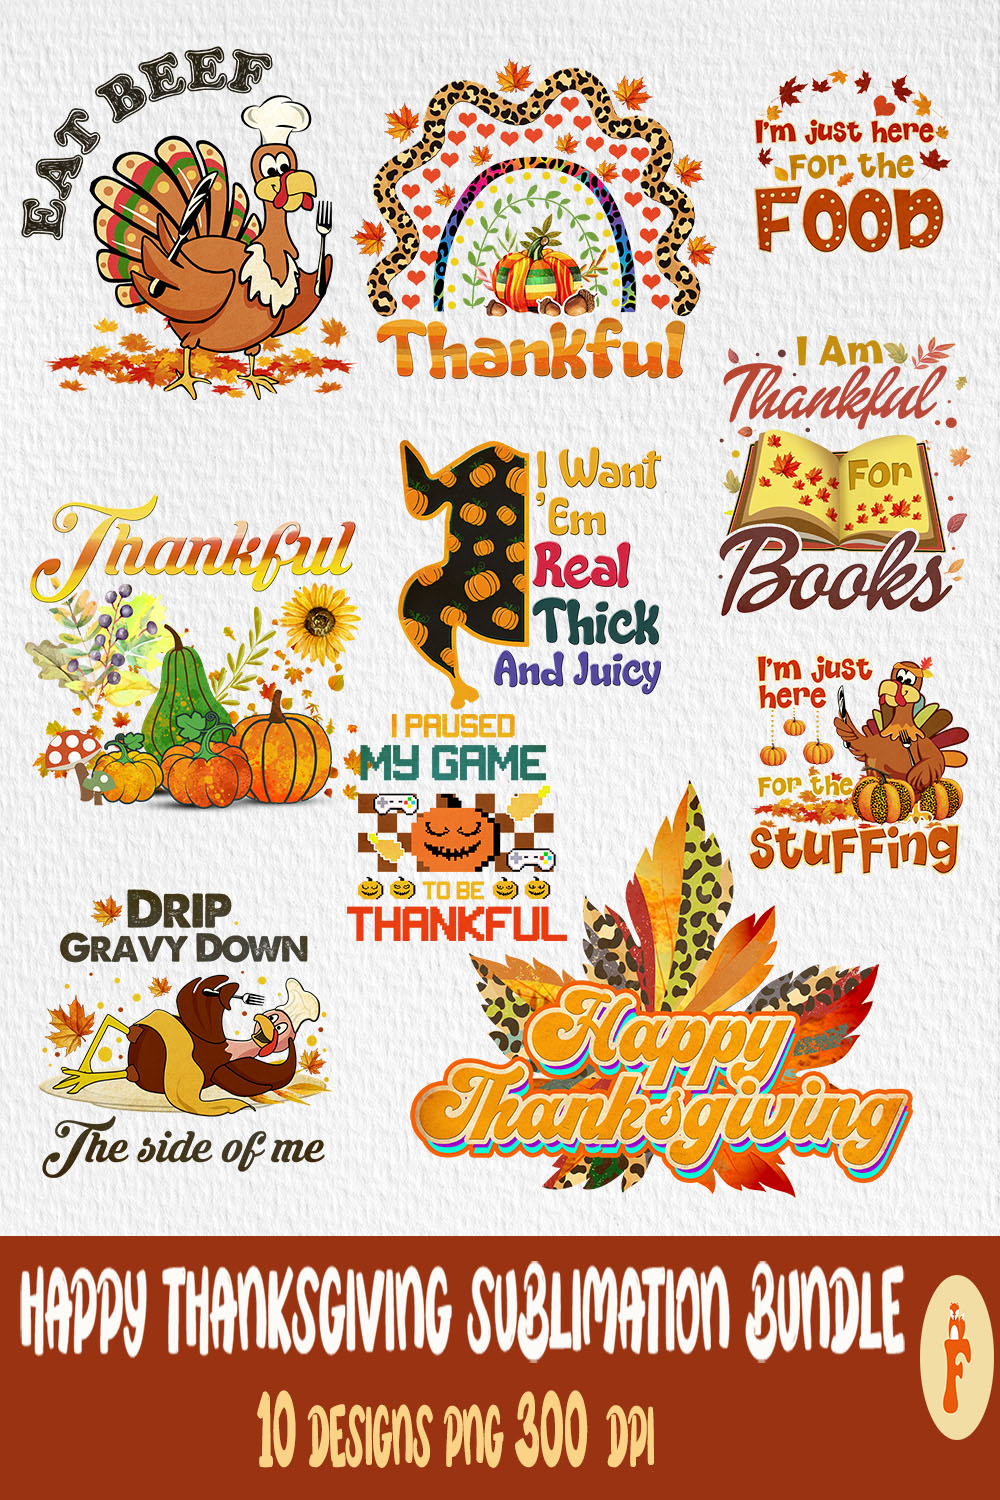 Best Happy Thanksgiving Sublimation T-Shirt Designs pinterest image.